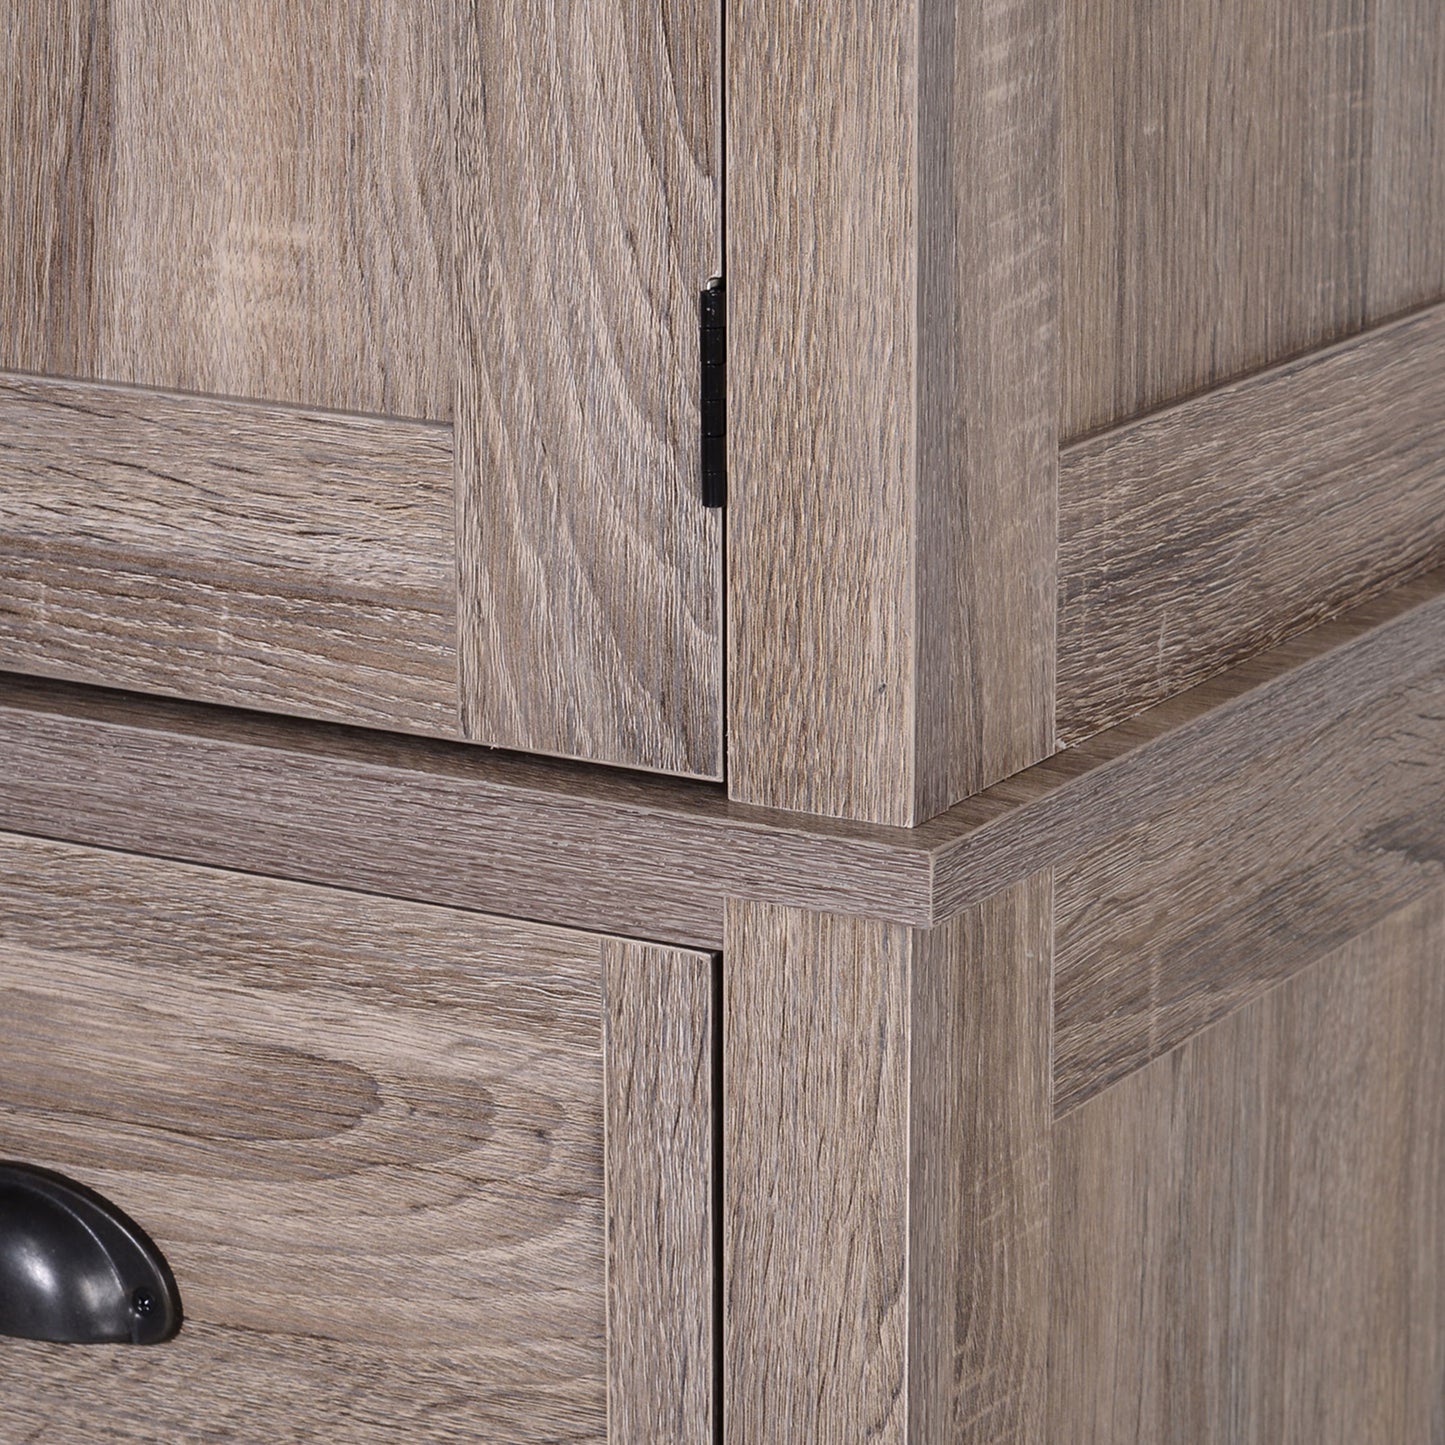 HOMCOM MDF Freestanding Kitchen Pantry Cabinet Wood Tone